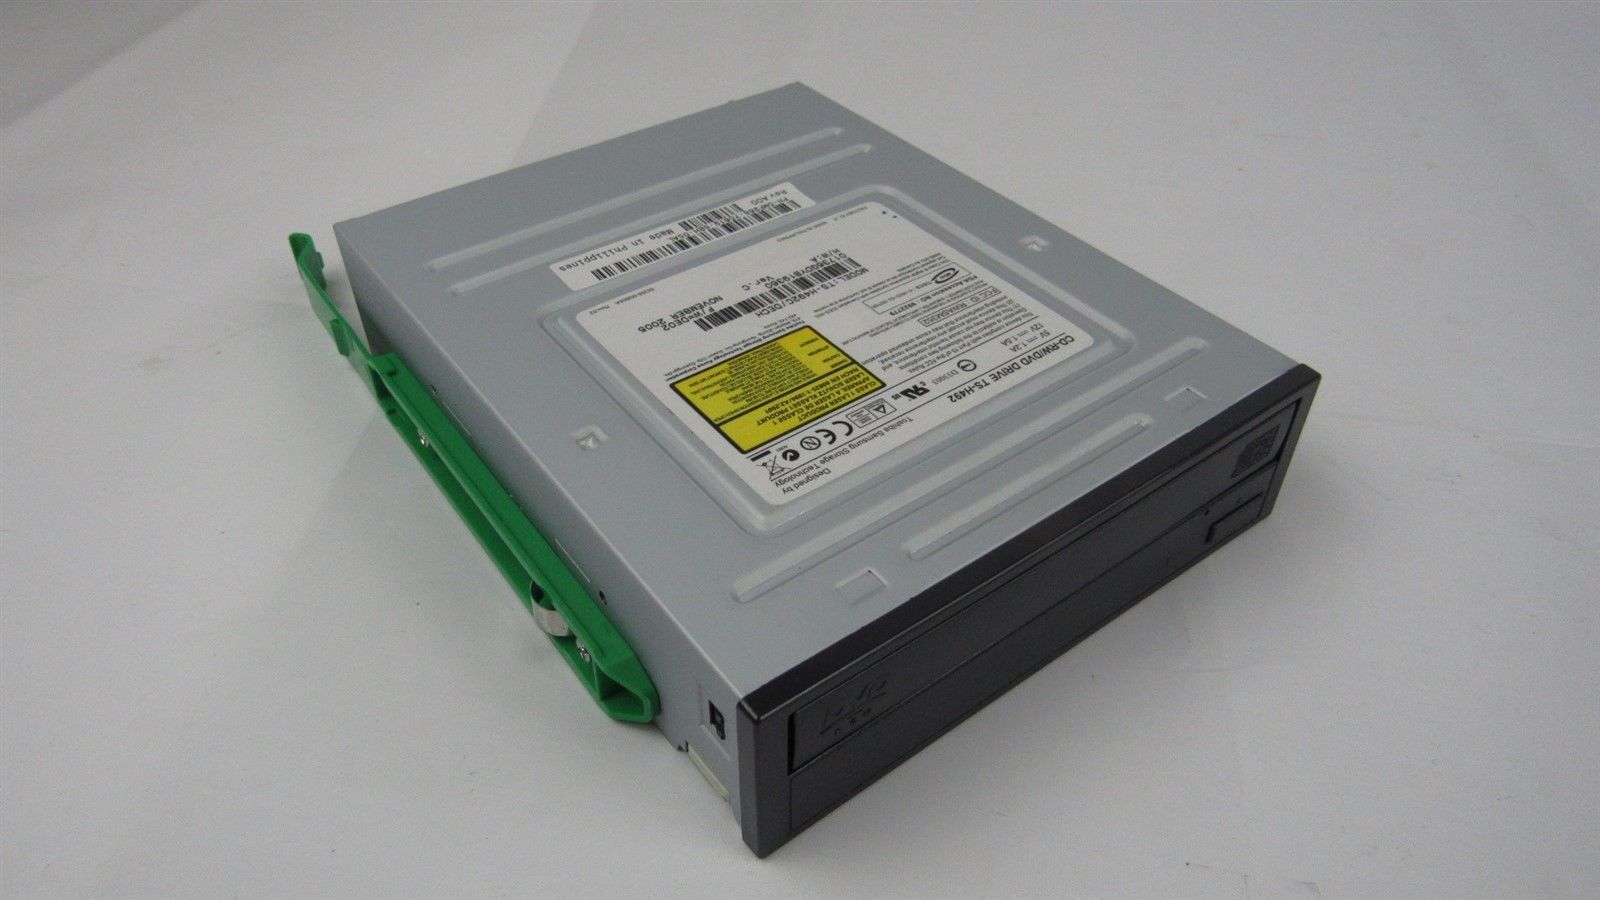 Dell Samsung Toshiba CD-RW DVD-ROM SATA Optical Drive 48X TS-492 MF268 0MF268